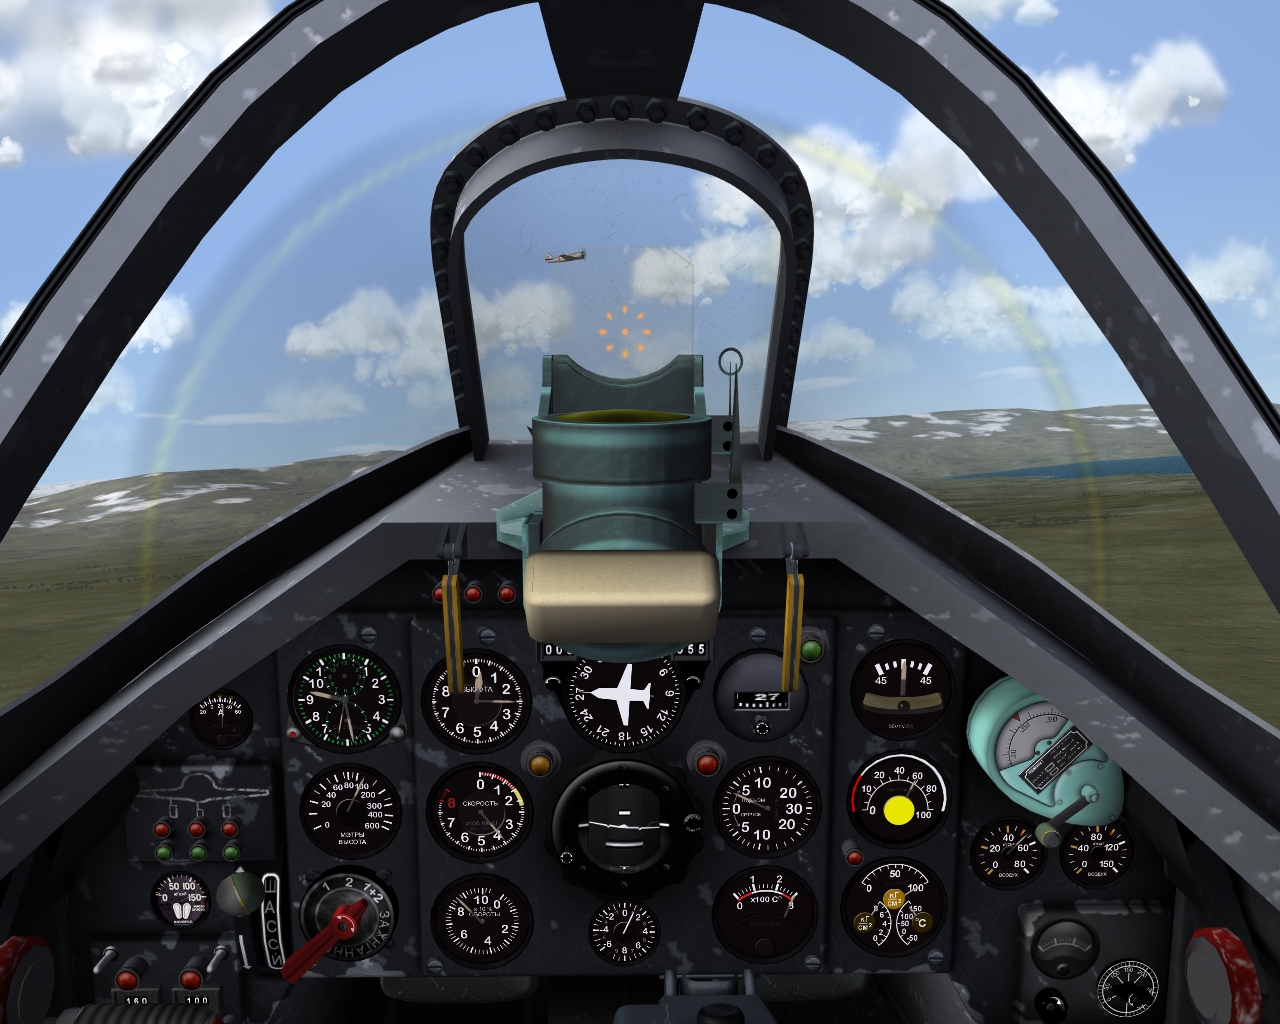 Lavochkin La-9 / La-11 cockpit